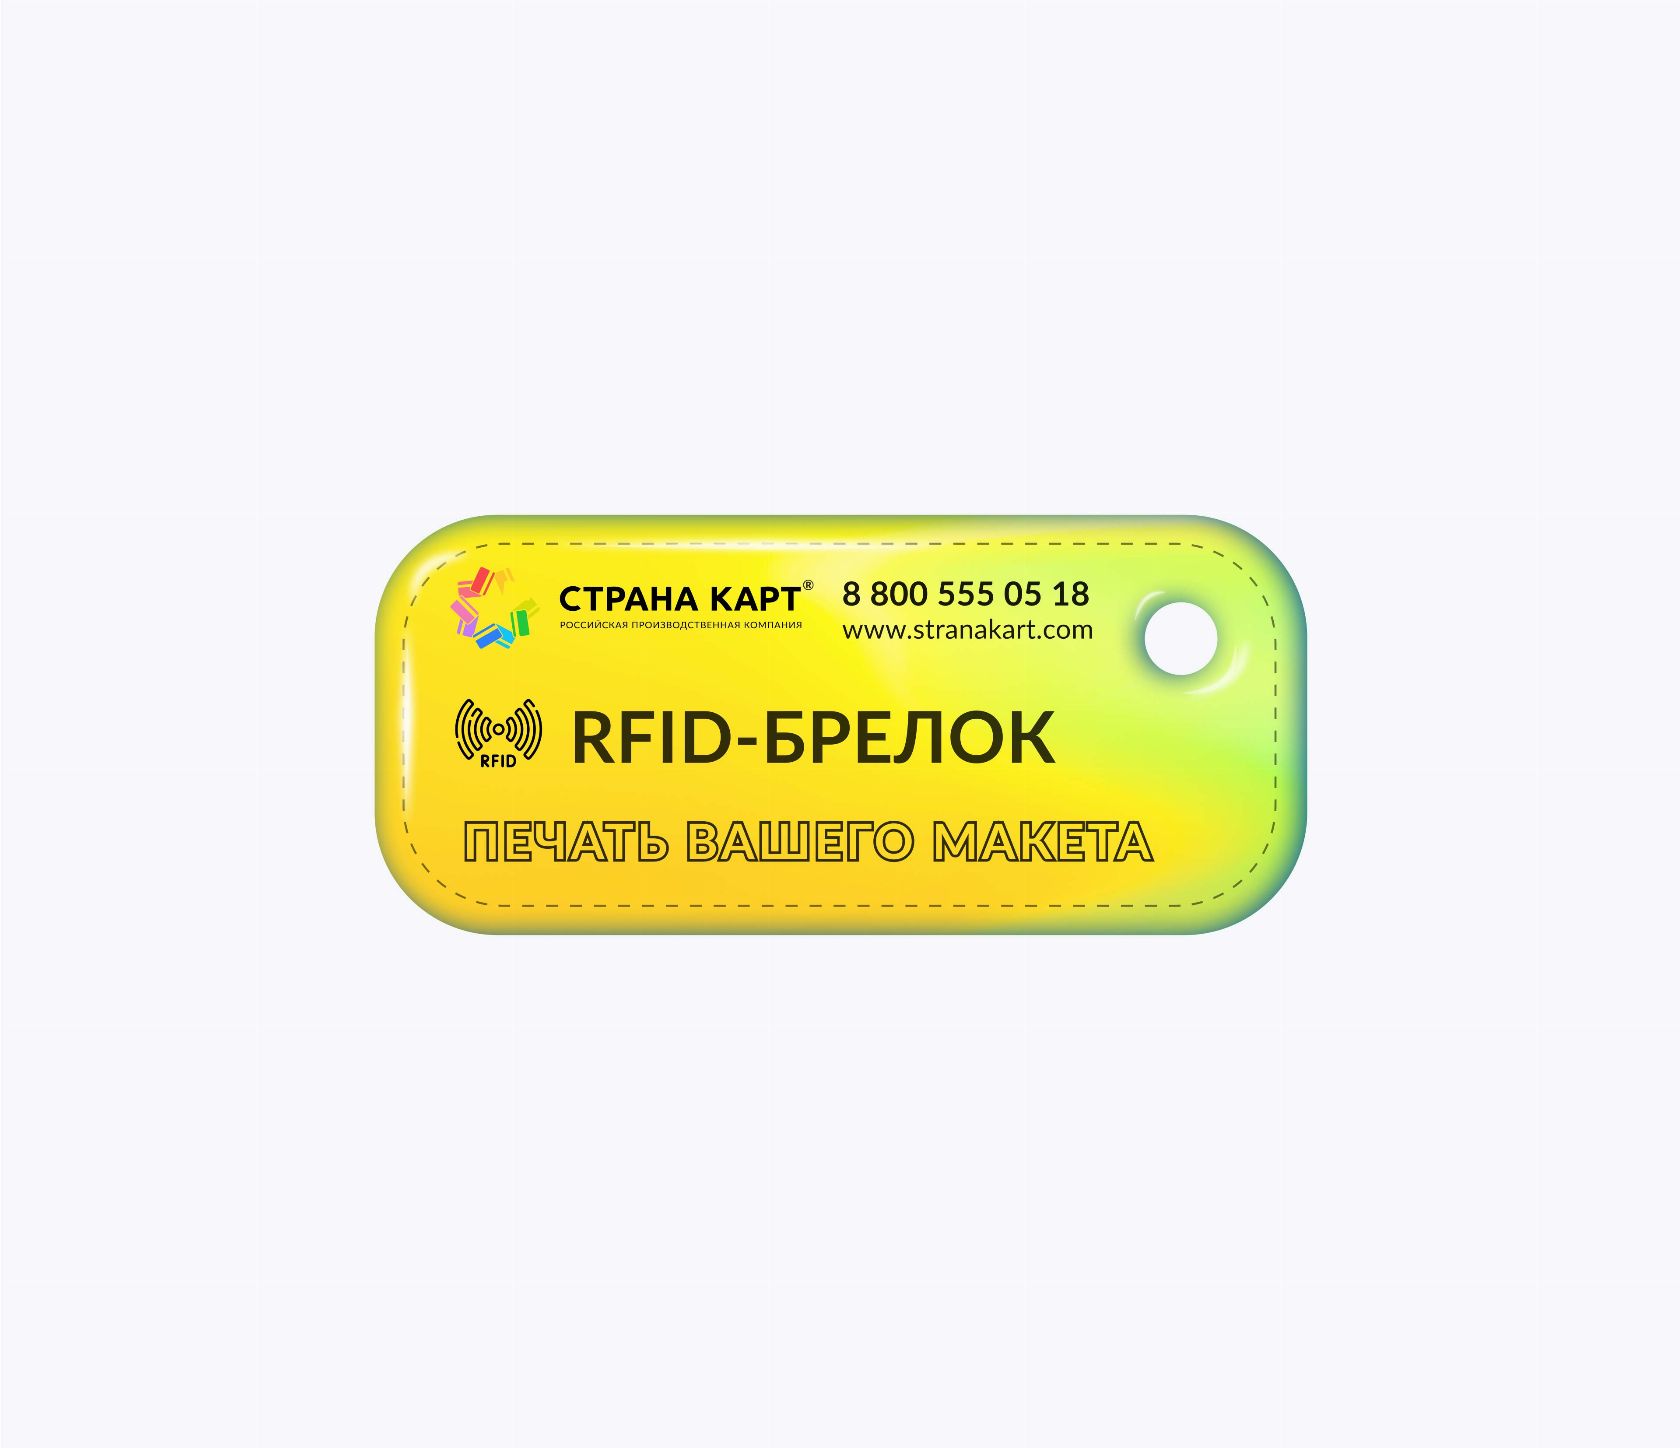 Прямоугольные мини RFID-брелоки NEOKEY® с чипом NXP MIFARE Classic 1k 7 byte UID RFID-брелоки NEOKEY® с чипом NXP MIFARE Classic 1k 7 byte UID и вашим логотипом